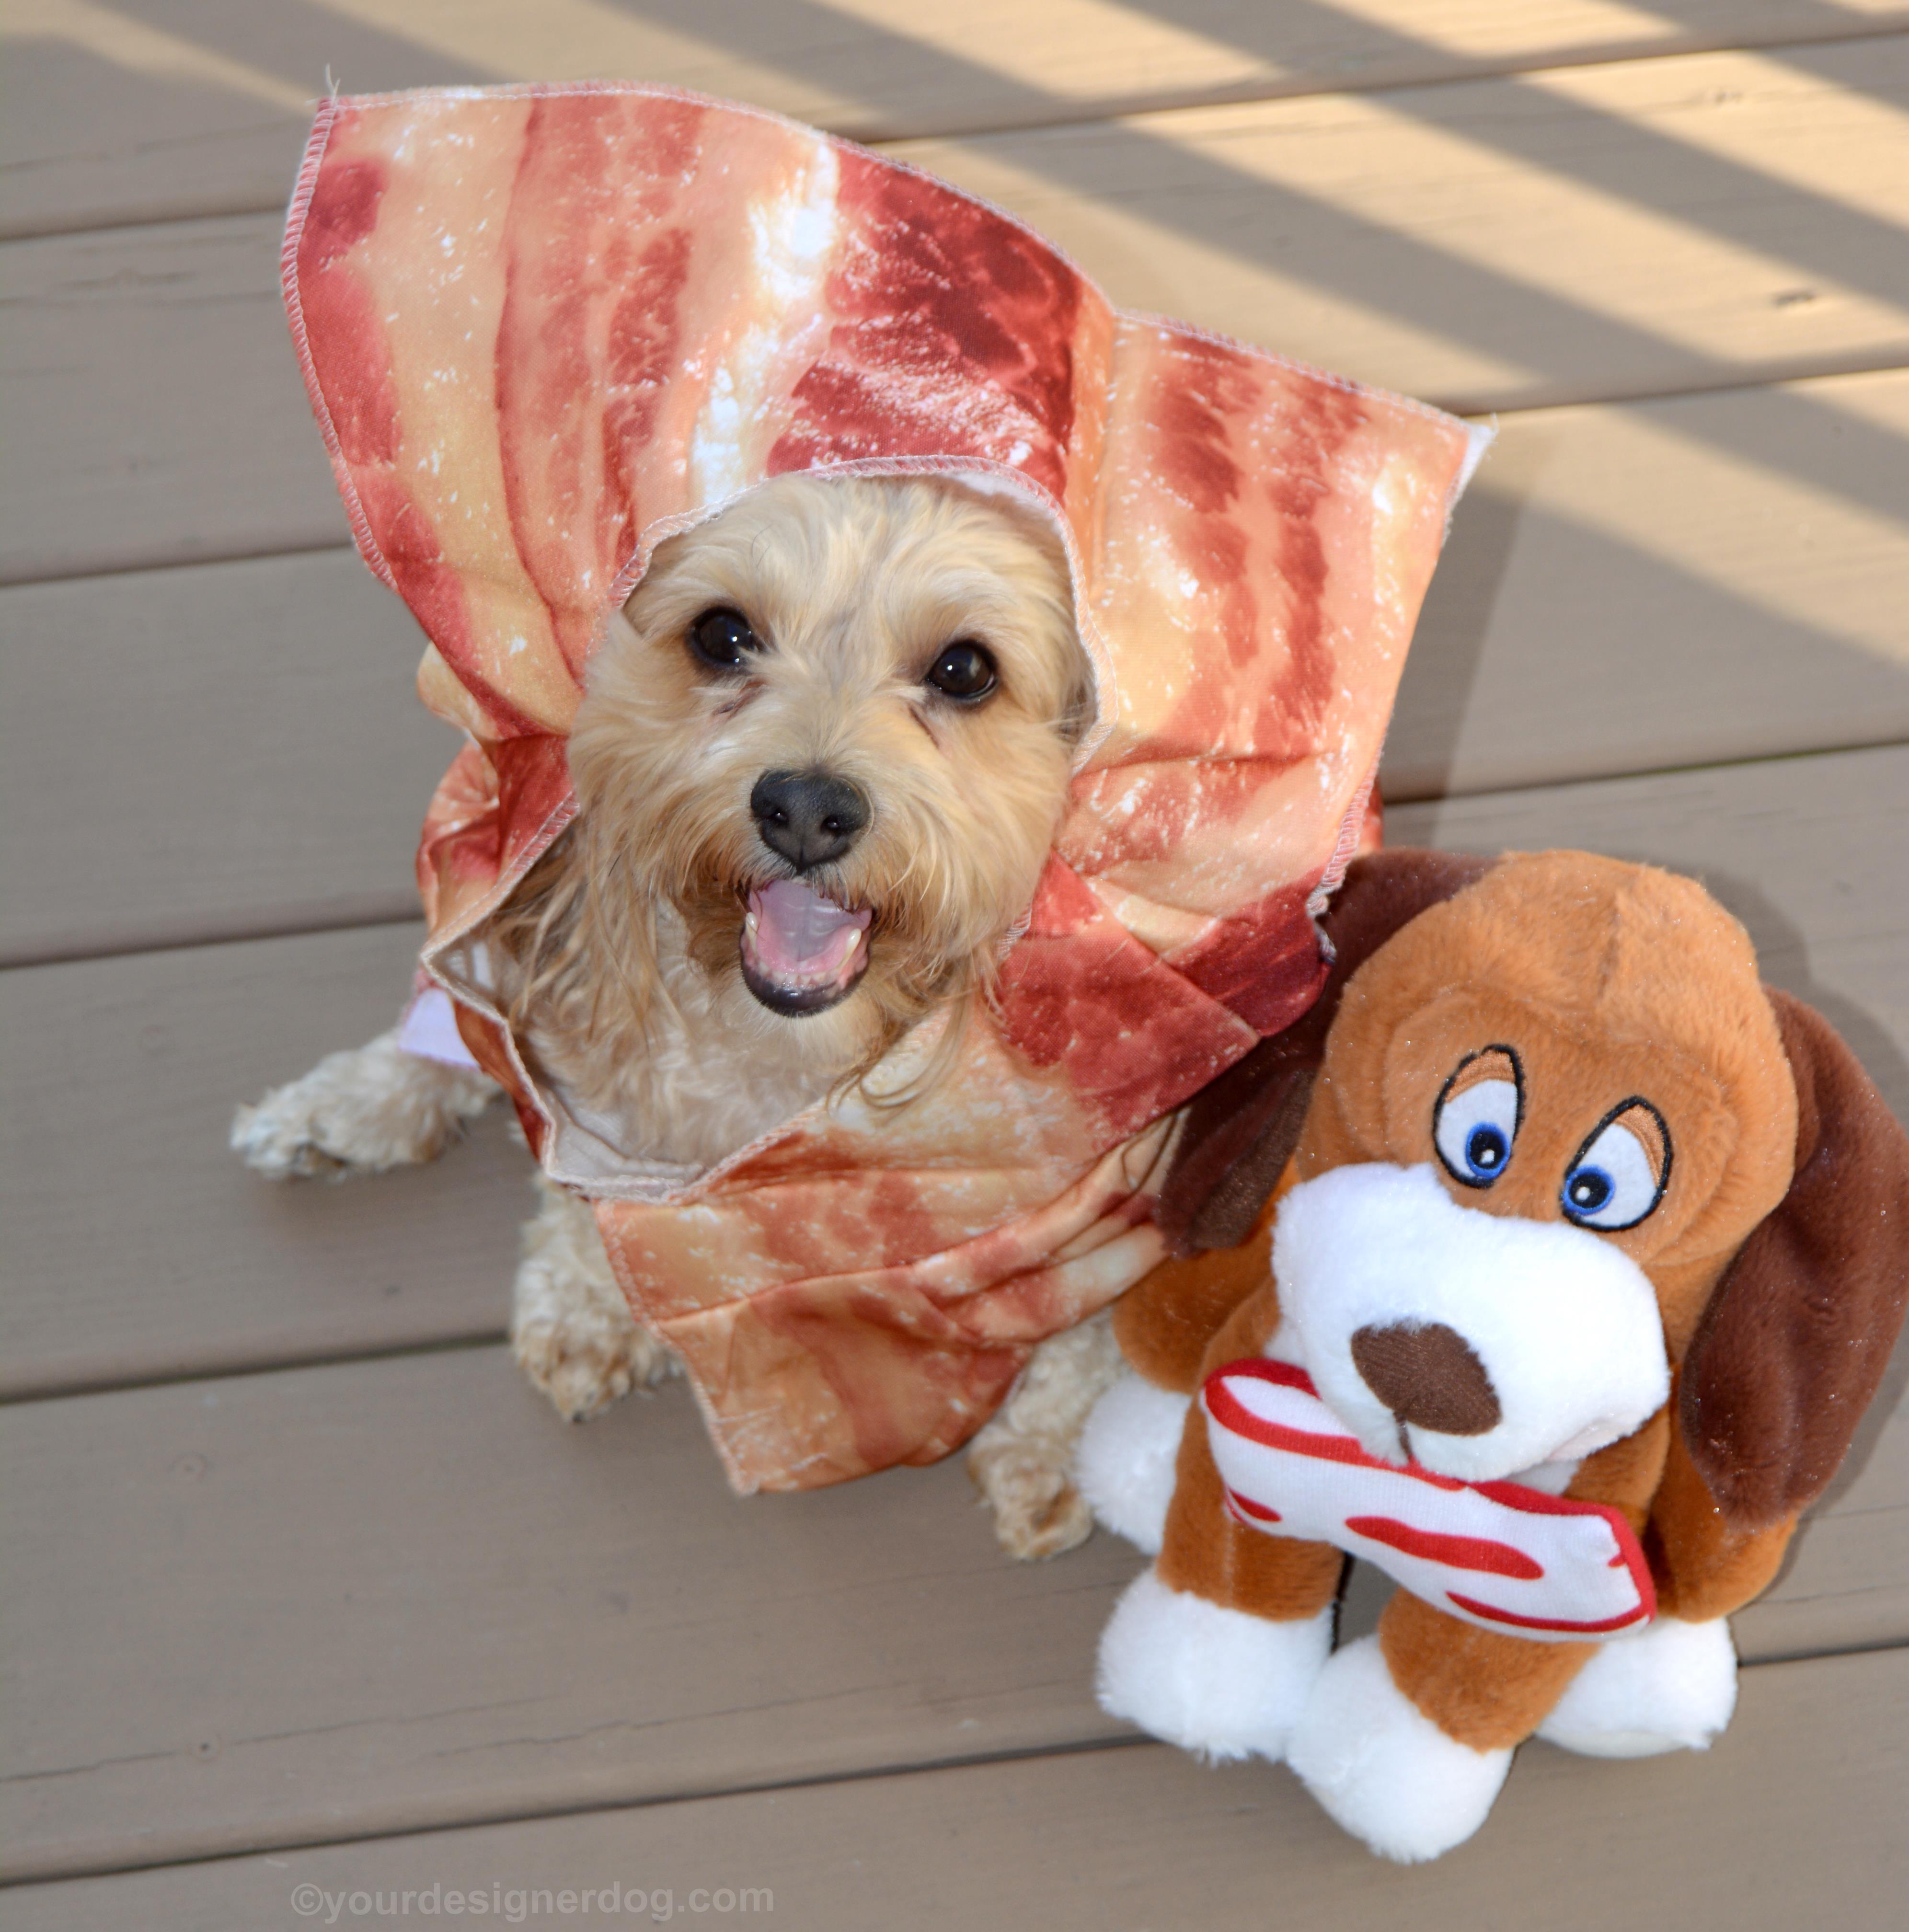 What’s Shakin’ Bacon?